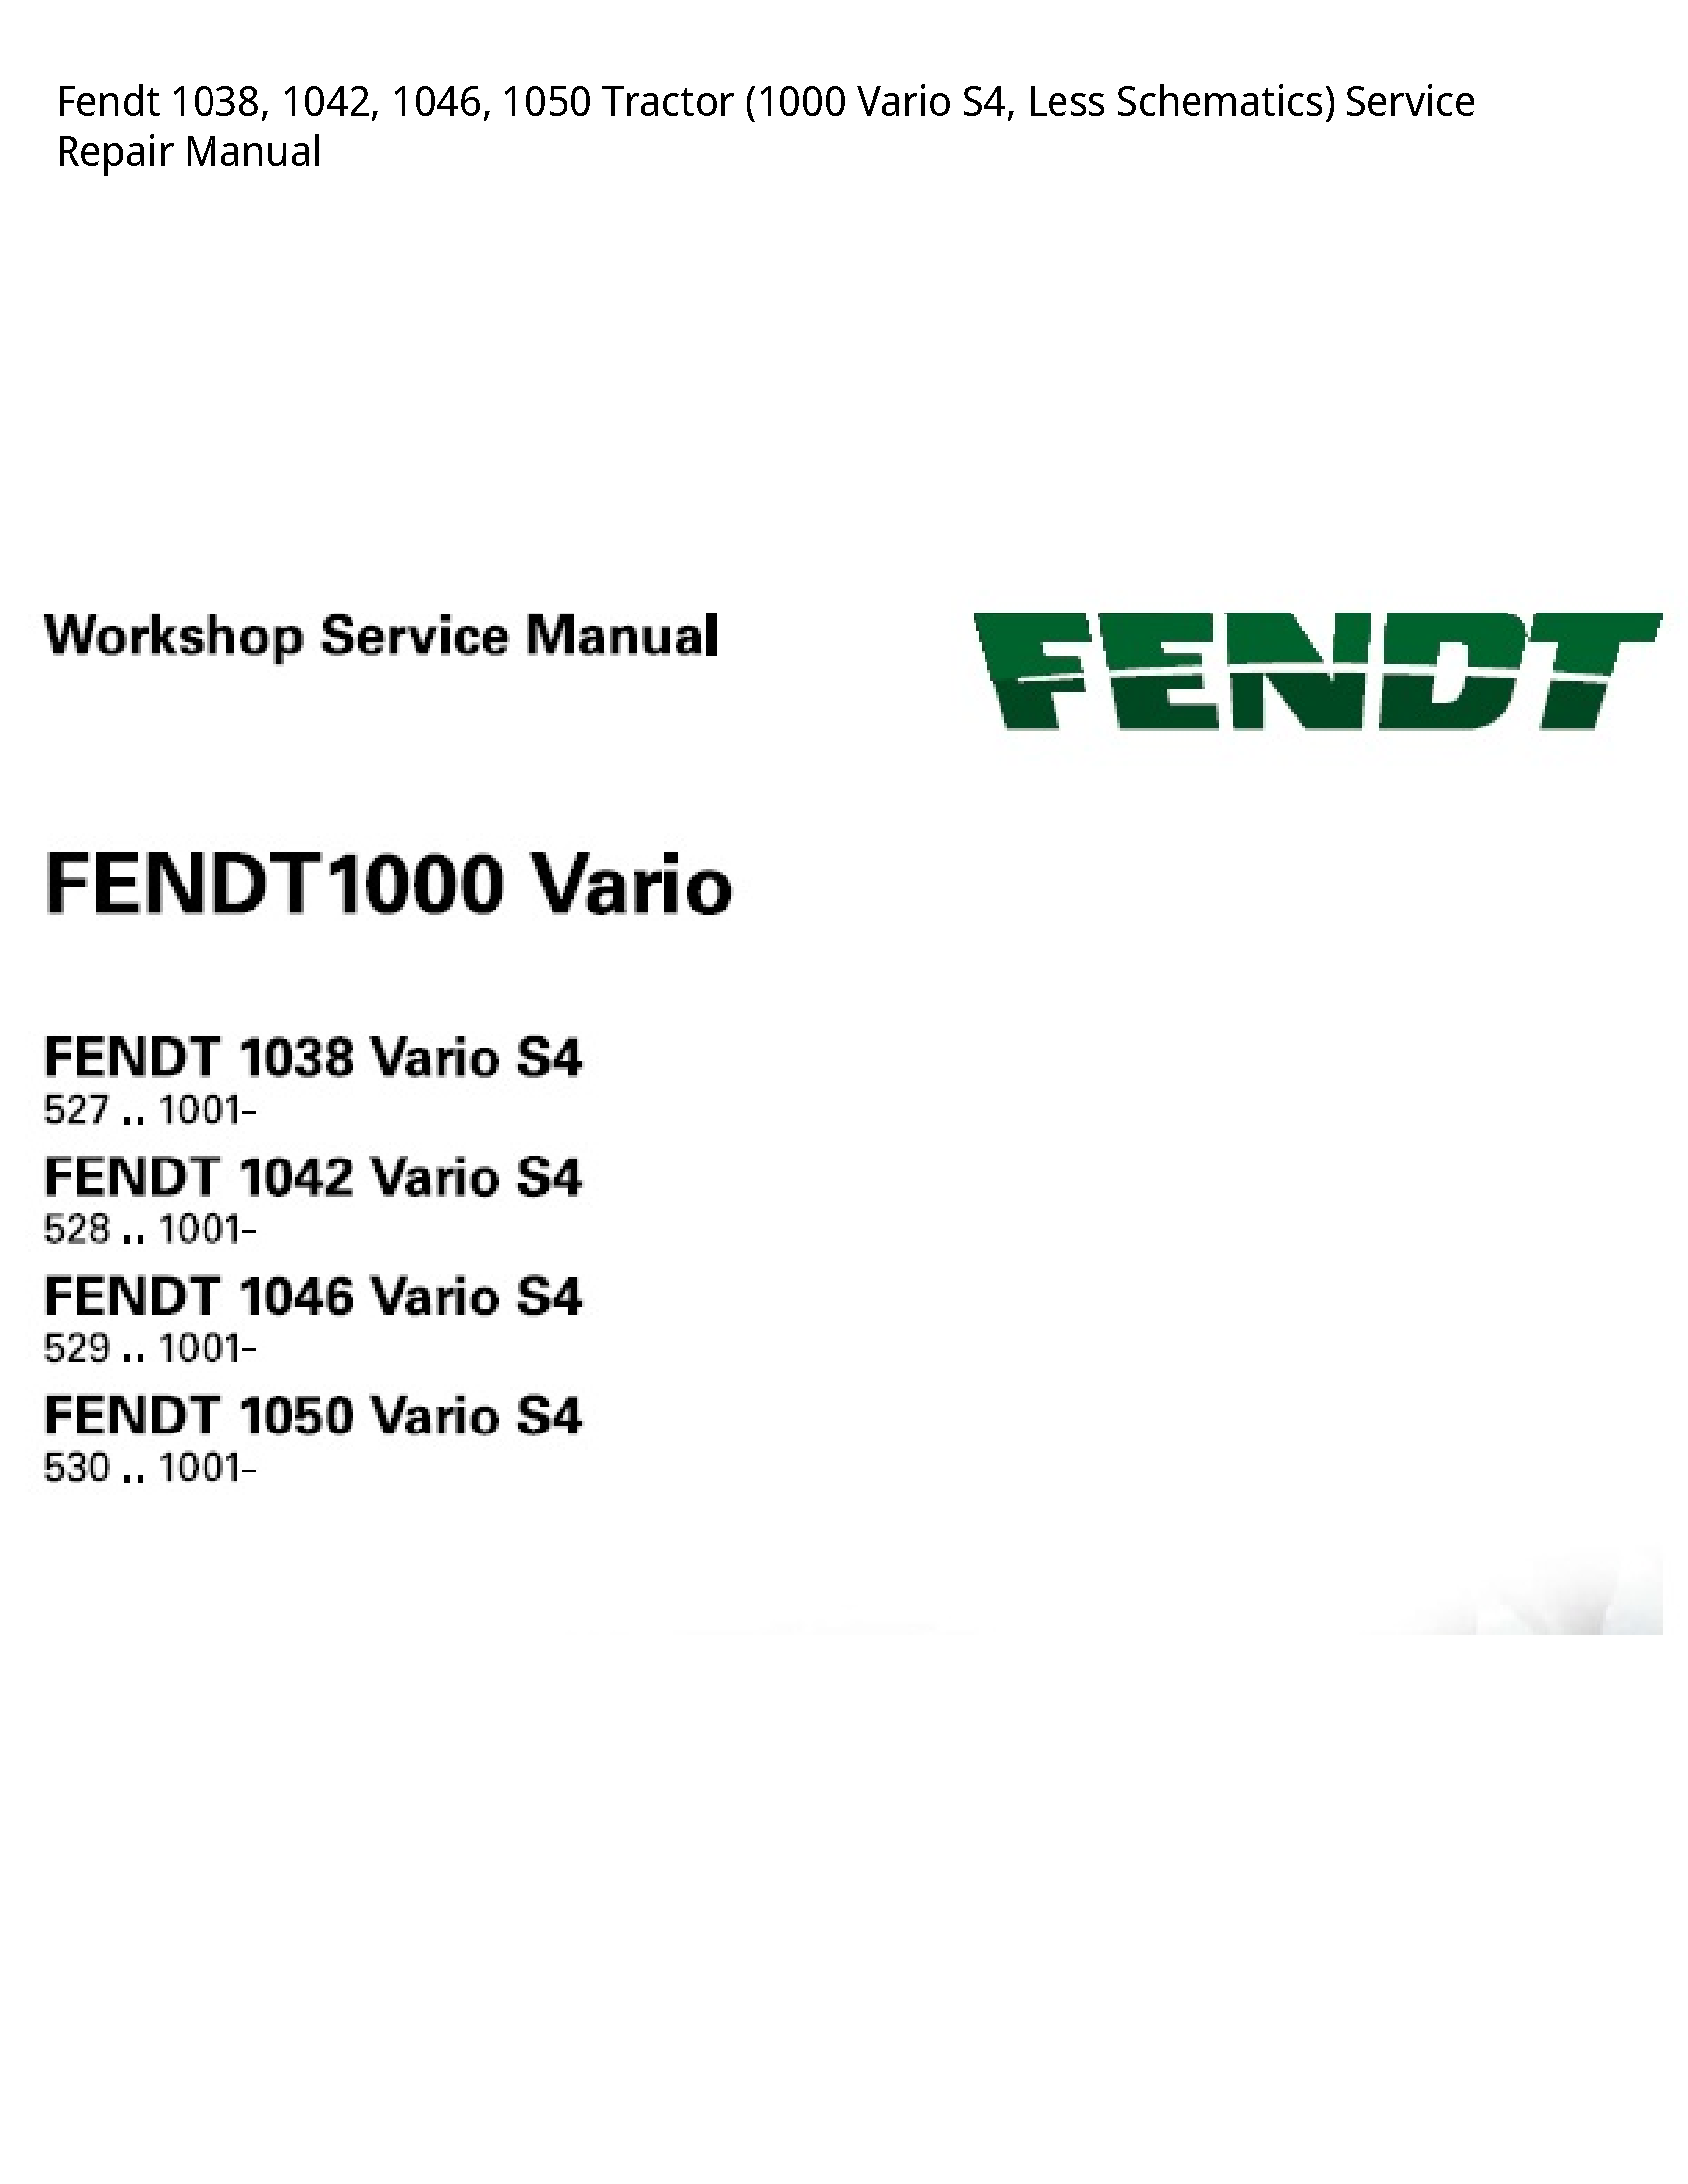 Fendt 1038 Tractor Vario Less Schematics) manual